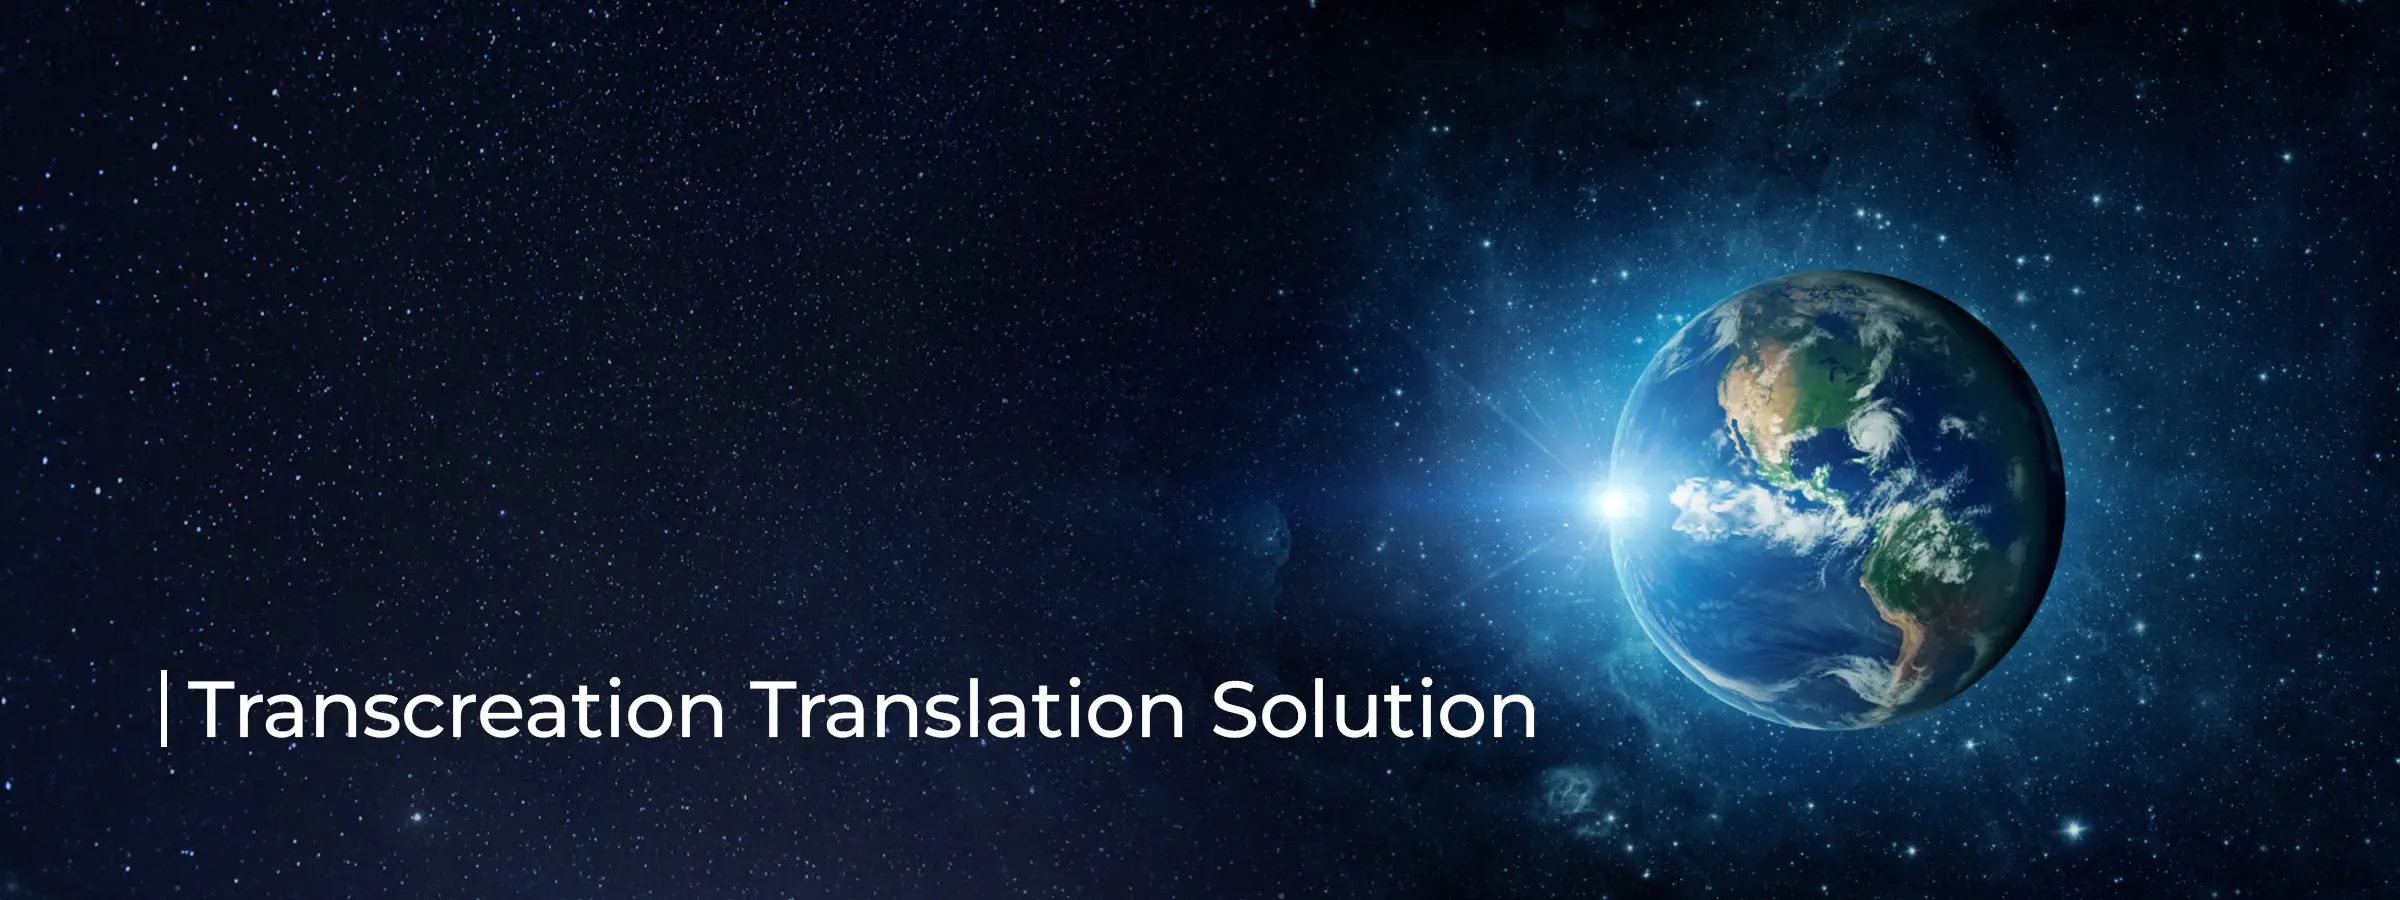 transcreation-translation-solution